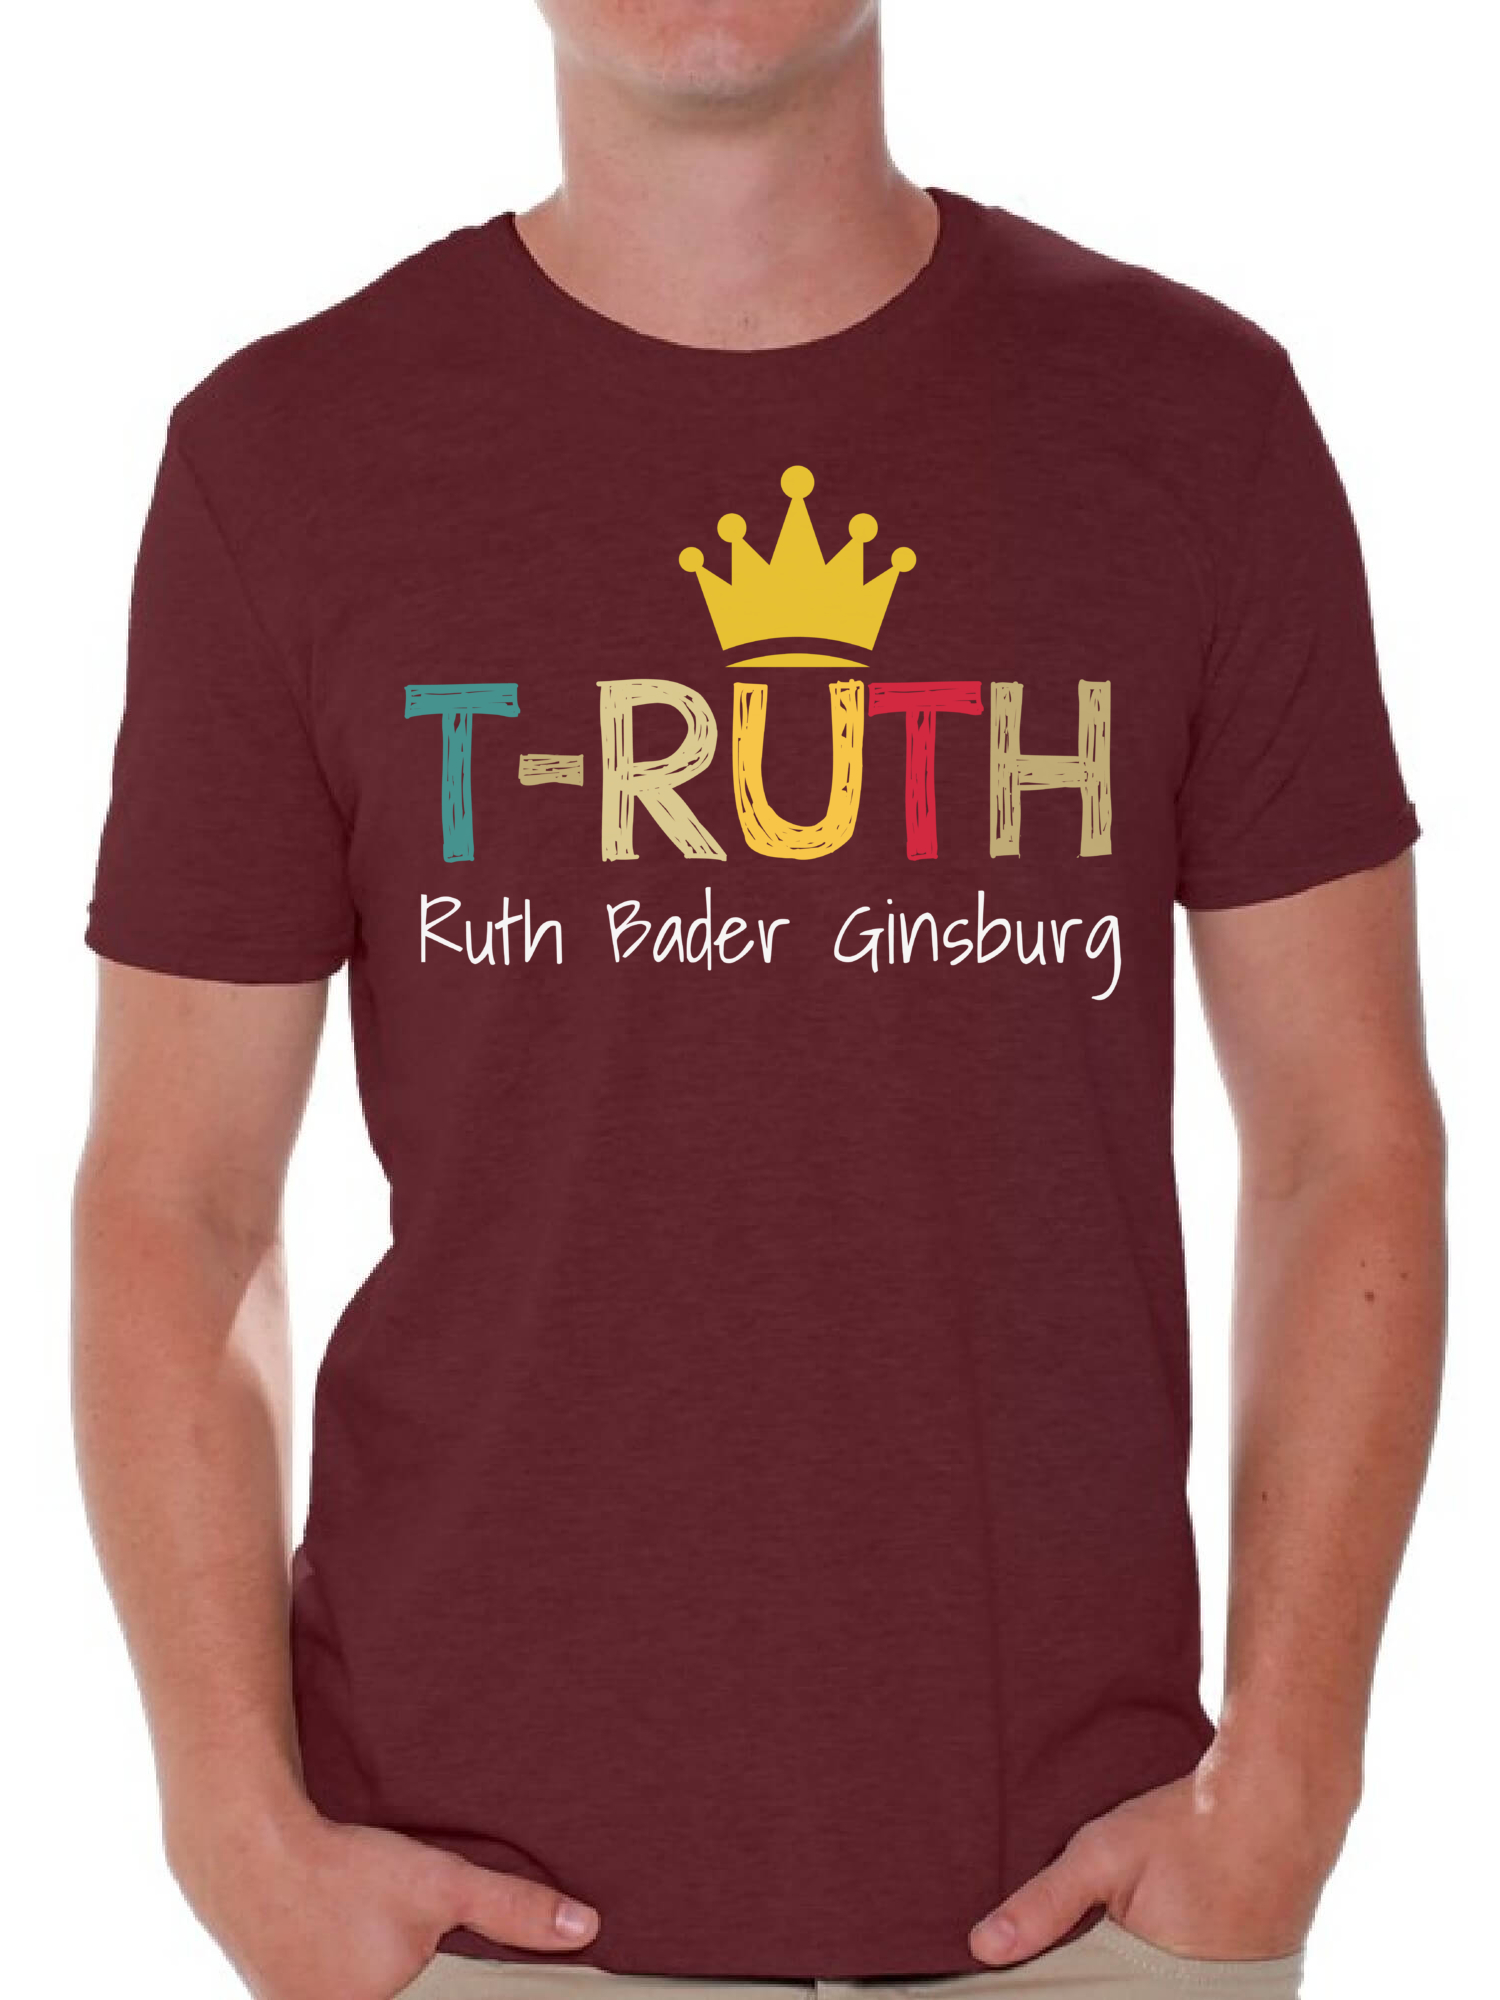 Awkward Styles Ruth Bader Ginsburg Shirt for Men T-RUTH Notorious Shirt RBG T Shirt Mens Support Women Empowerment T-shirt - image 1 of 4